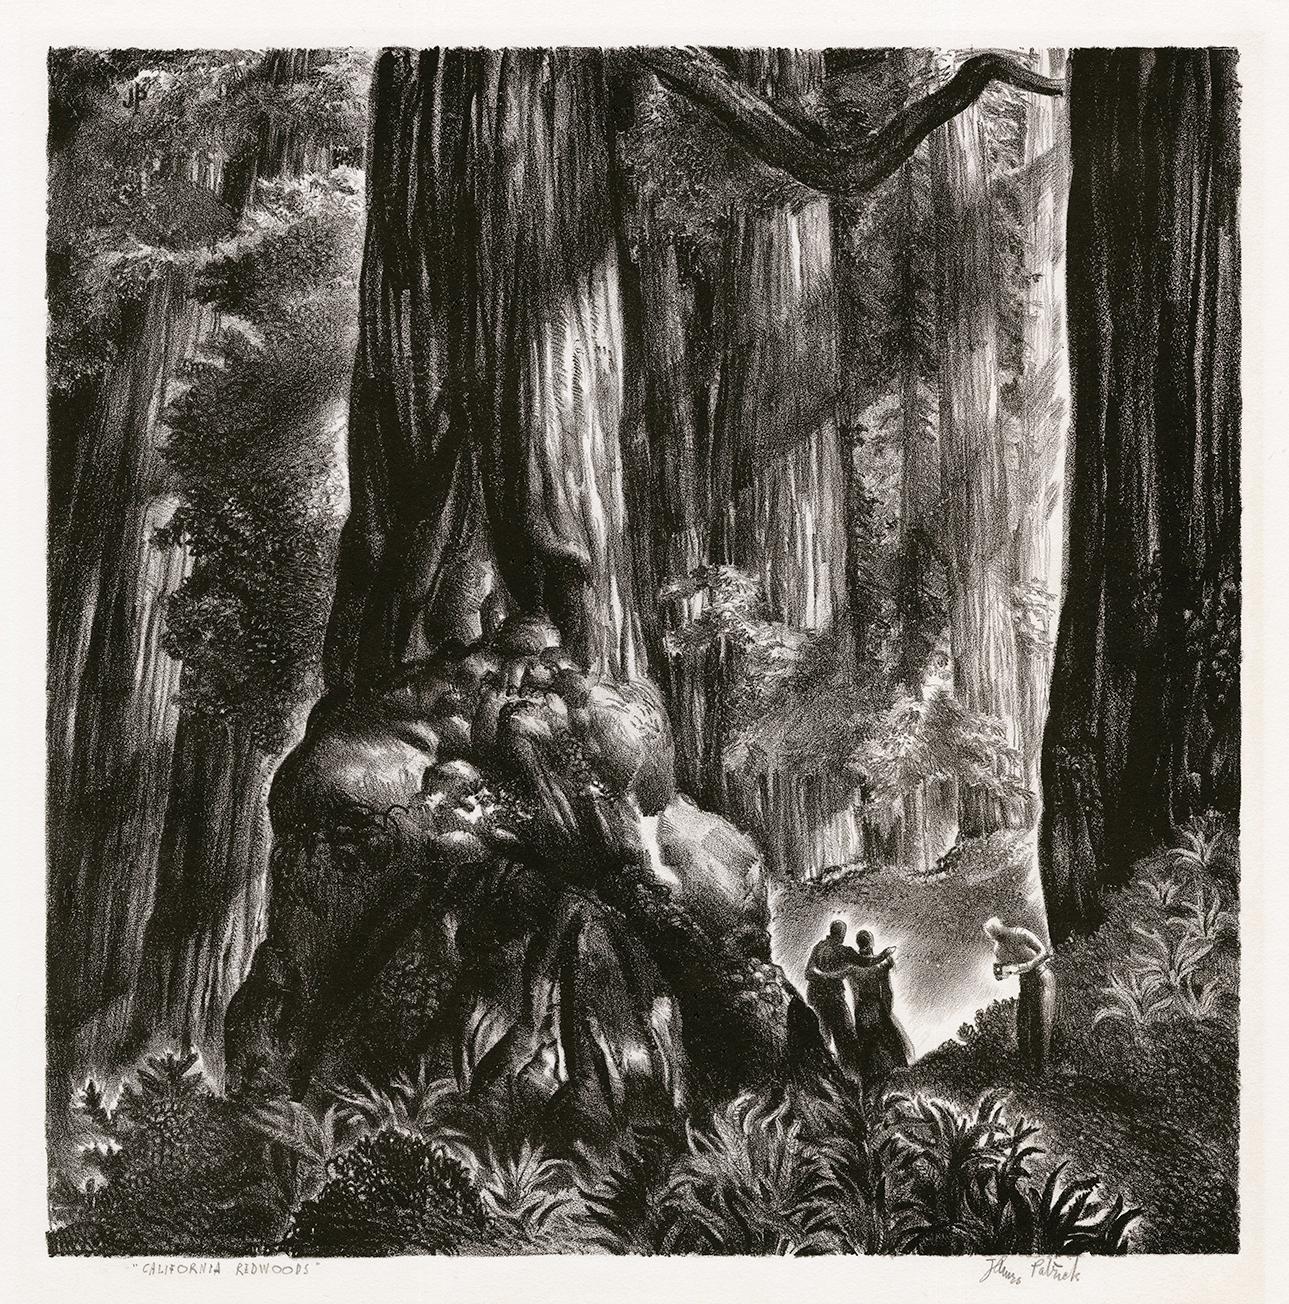 James Hollins Patrick Landscape Print - 'California Redwoods' — 1940s American Realism